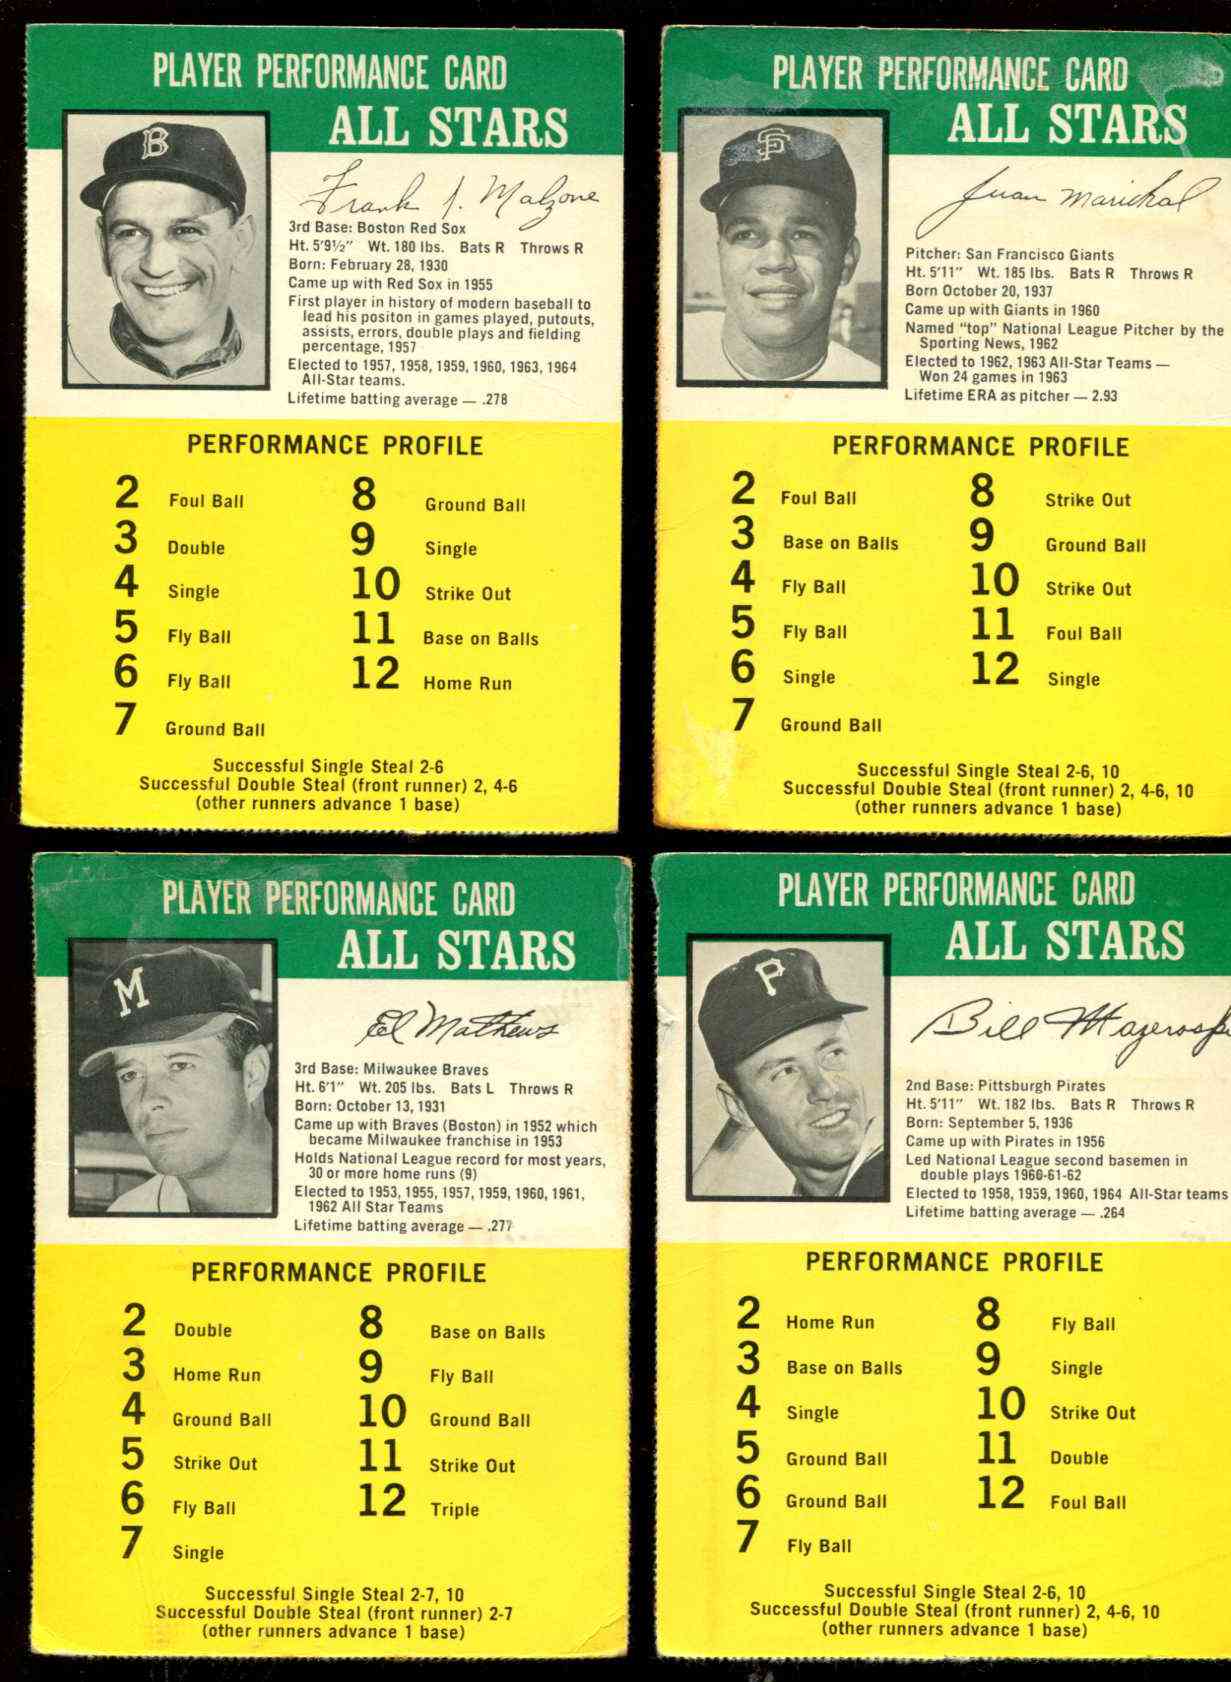 1965 Challenge the Yankees #37 Eddie Mathews [.277] (Braves) Baseball cards value